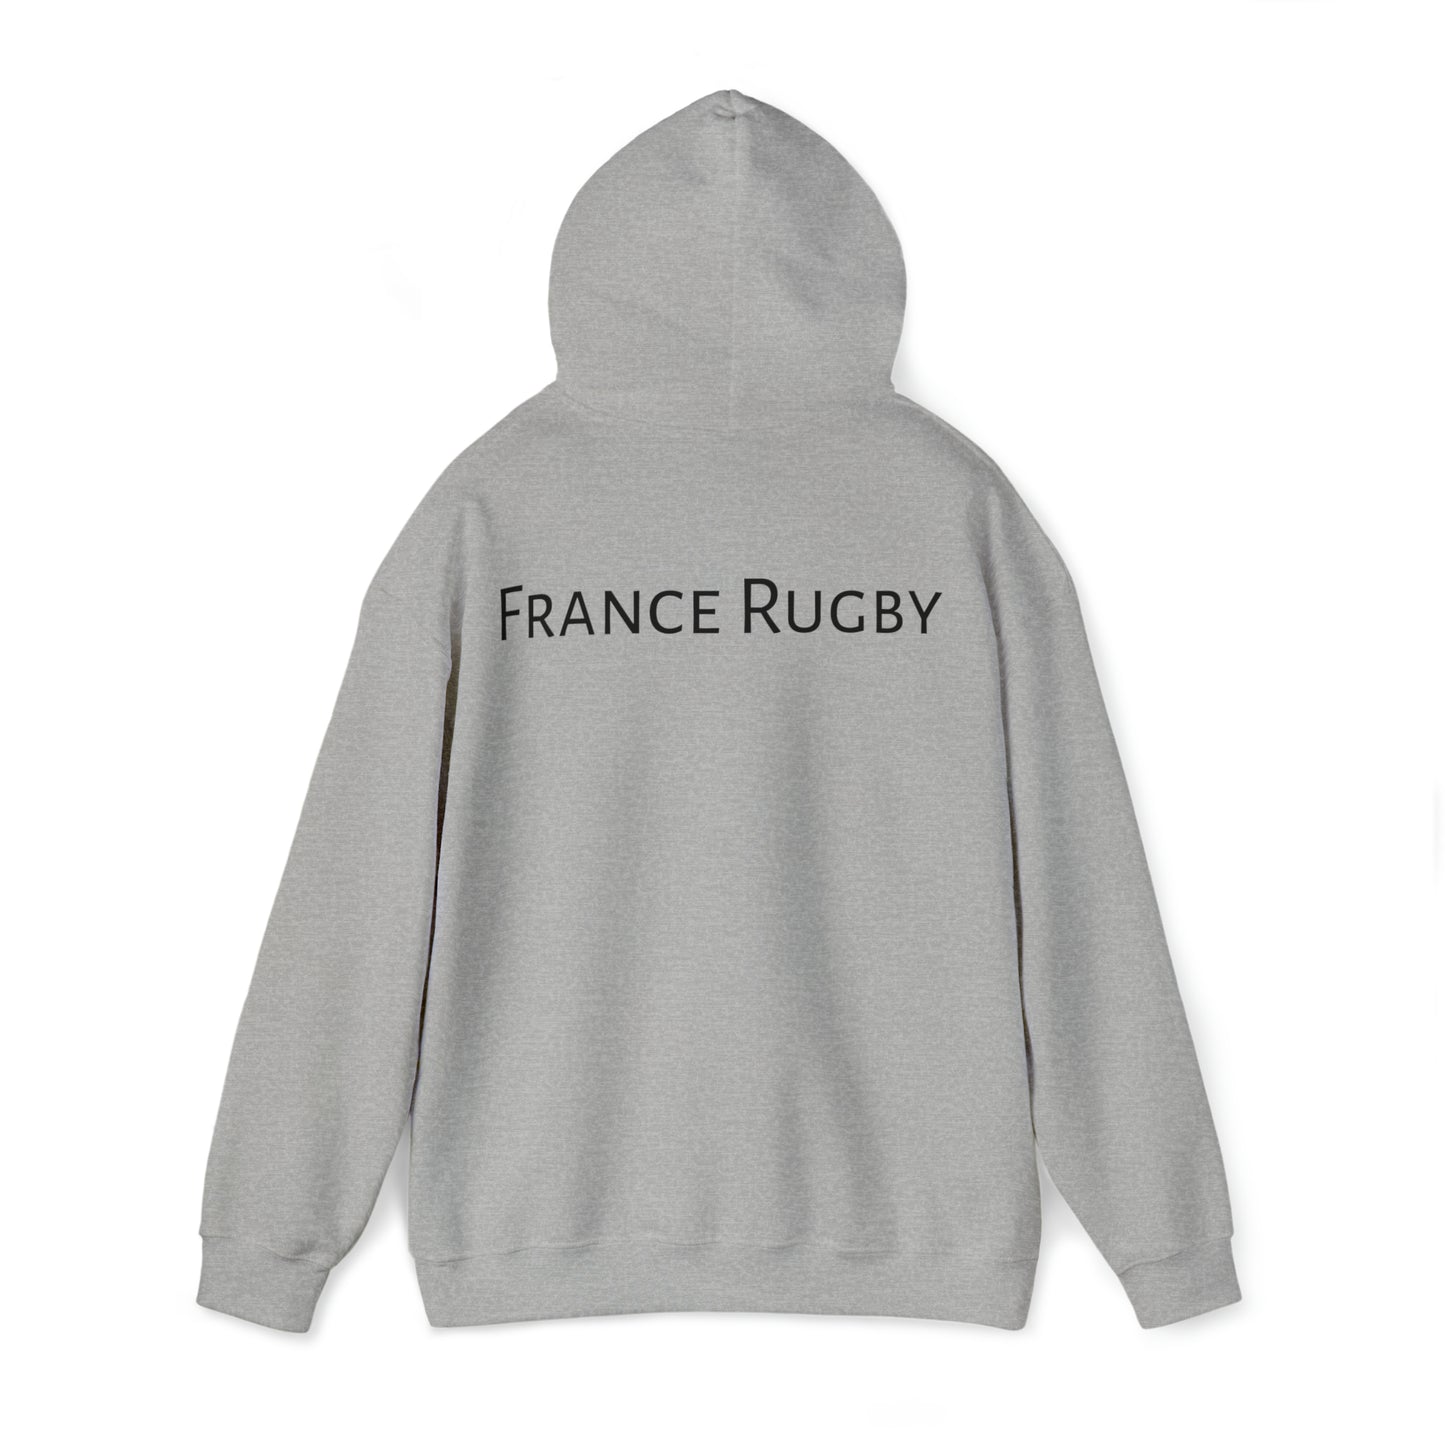 France Winning RWC 2023 - light hoodies